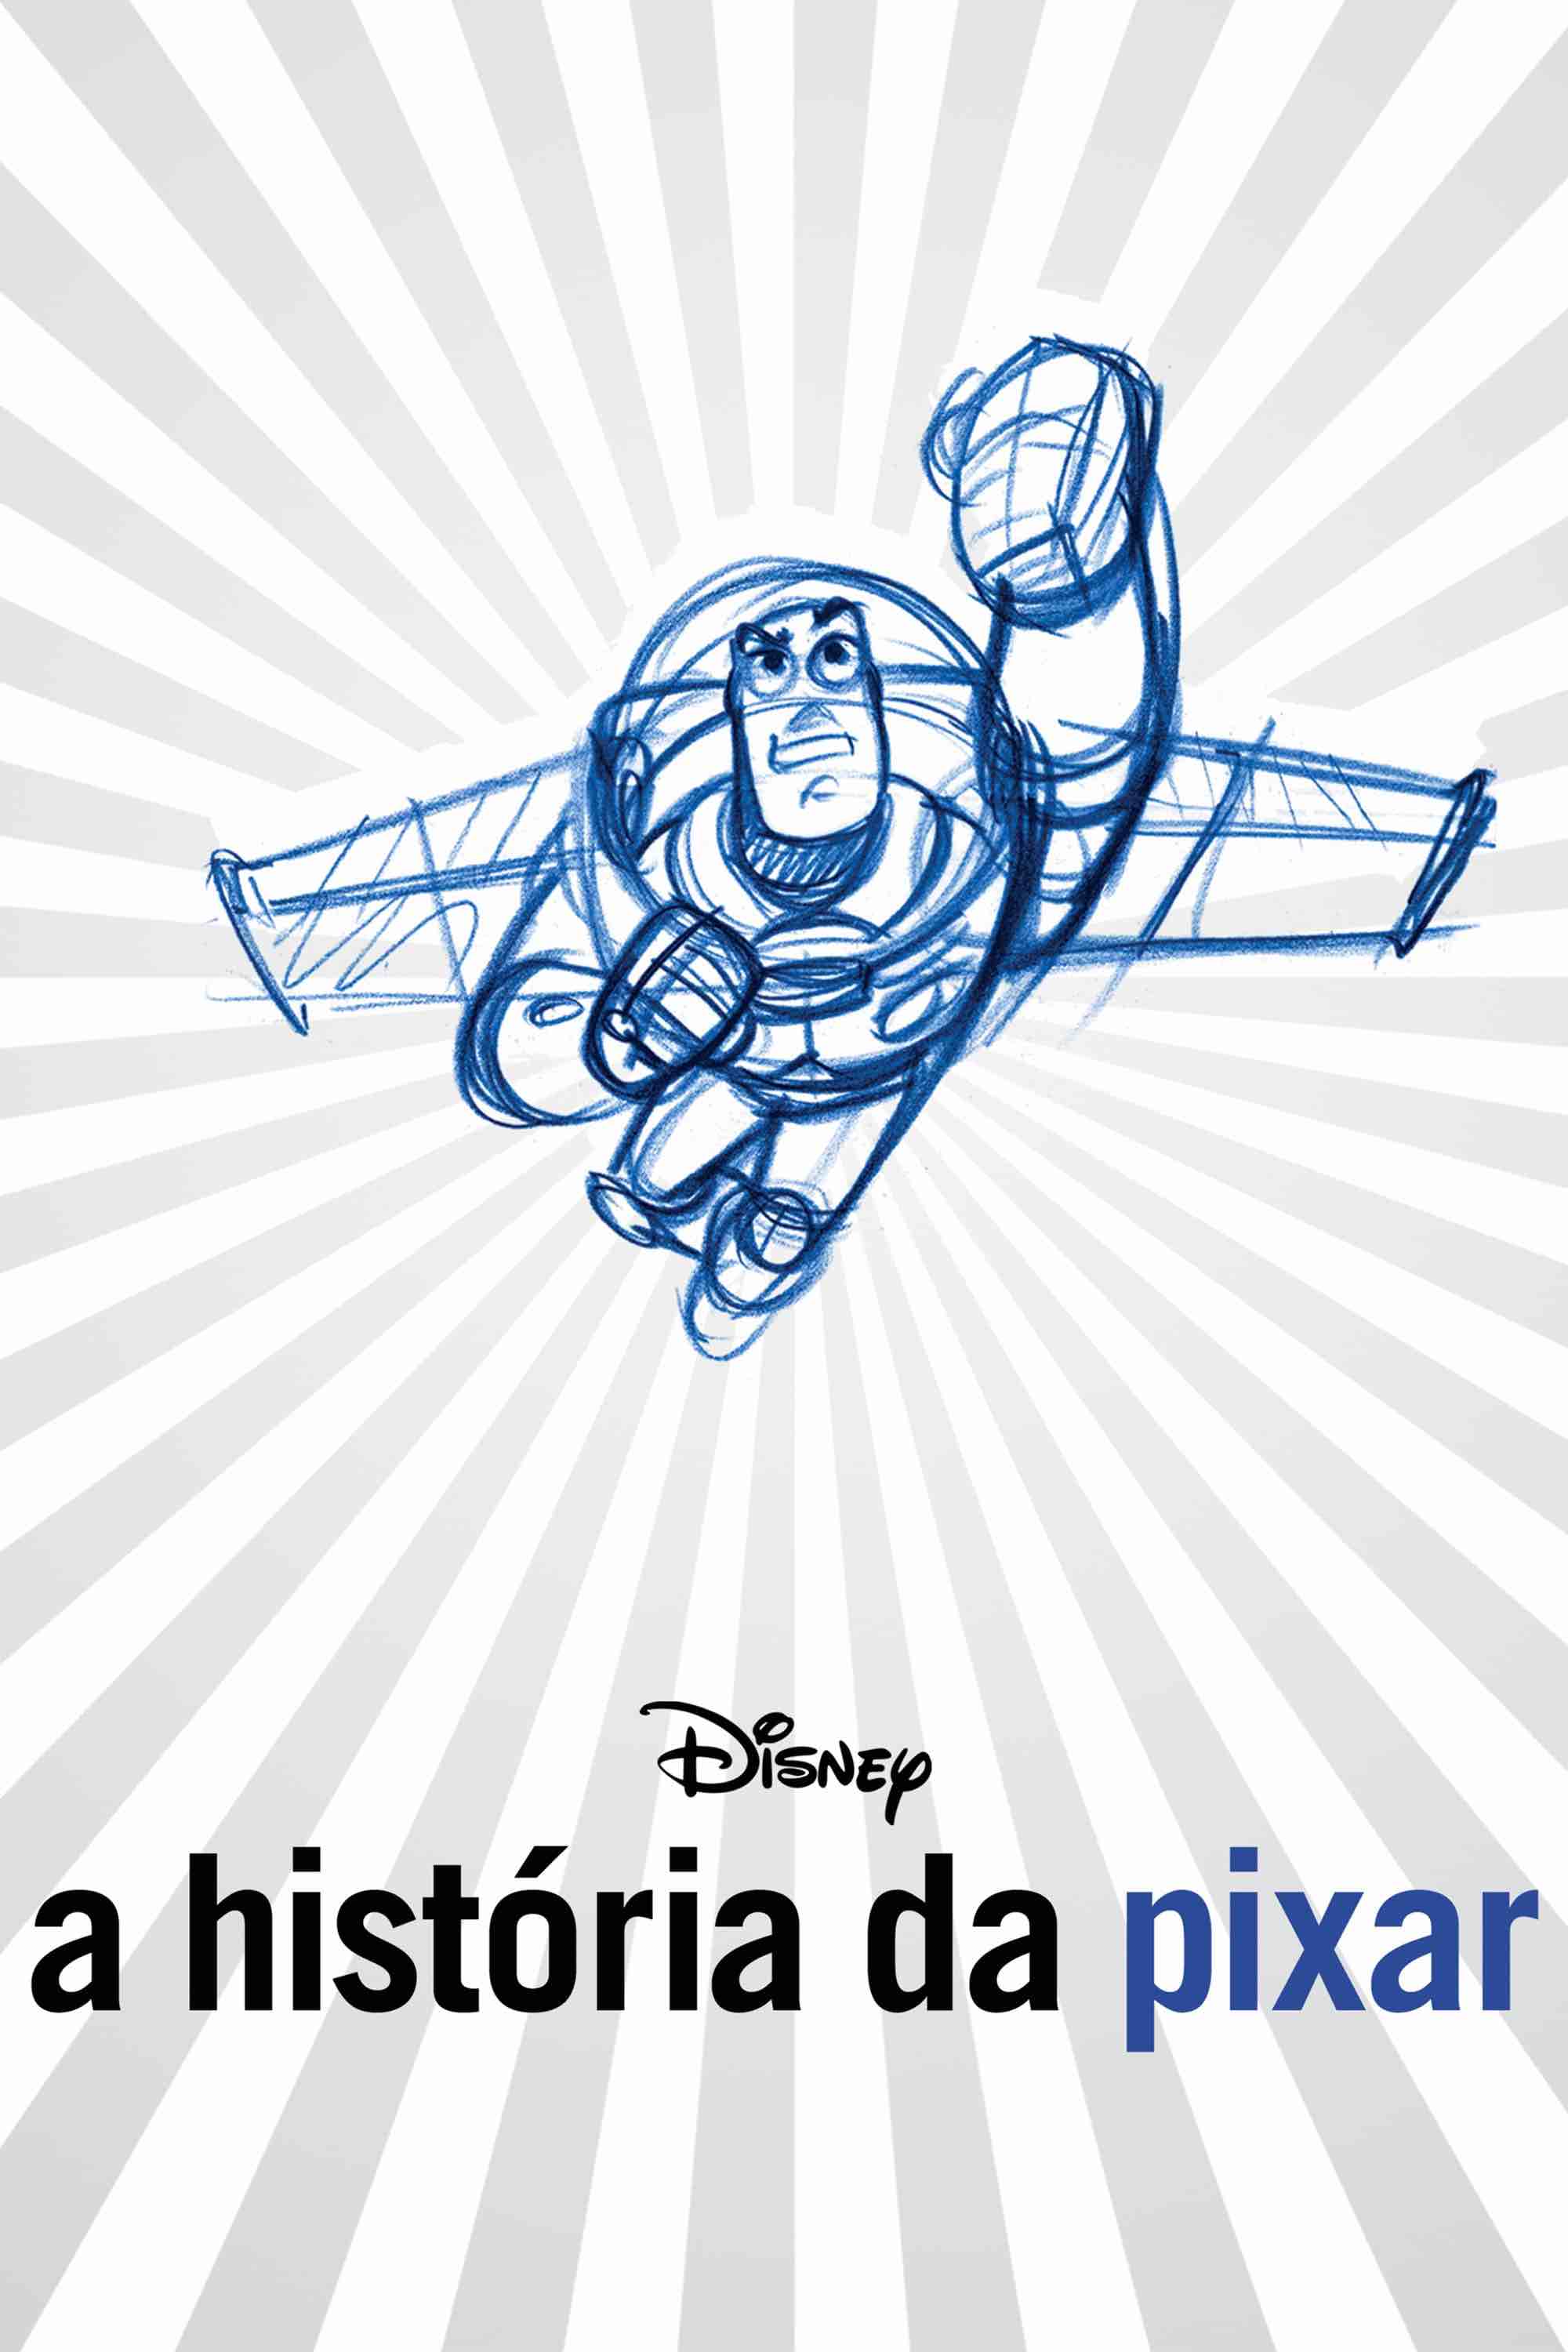 A-historia-da-pixar.jpg